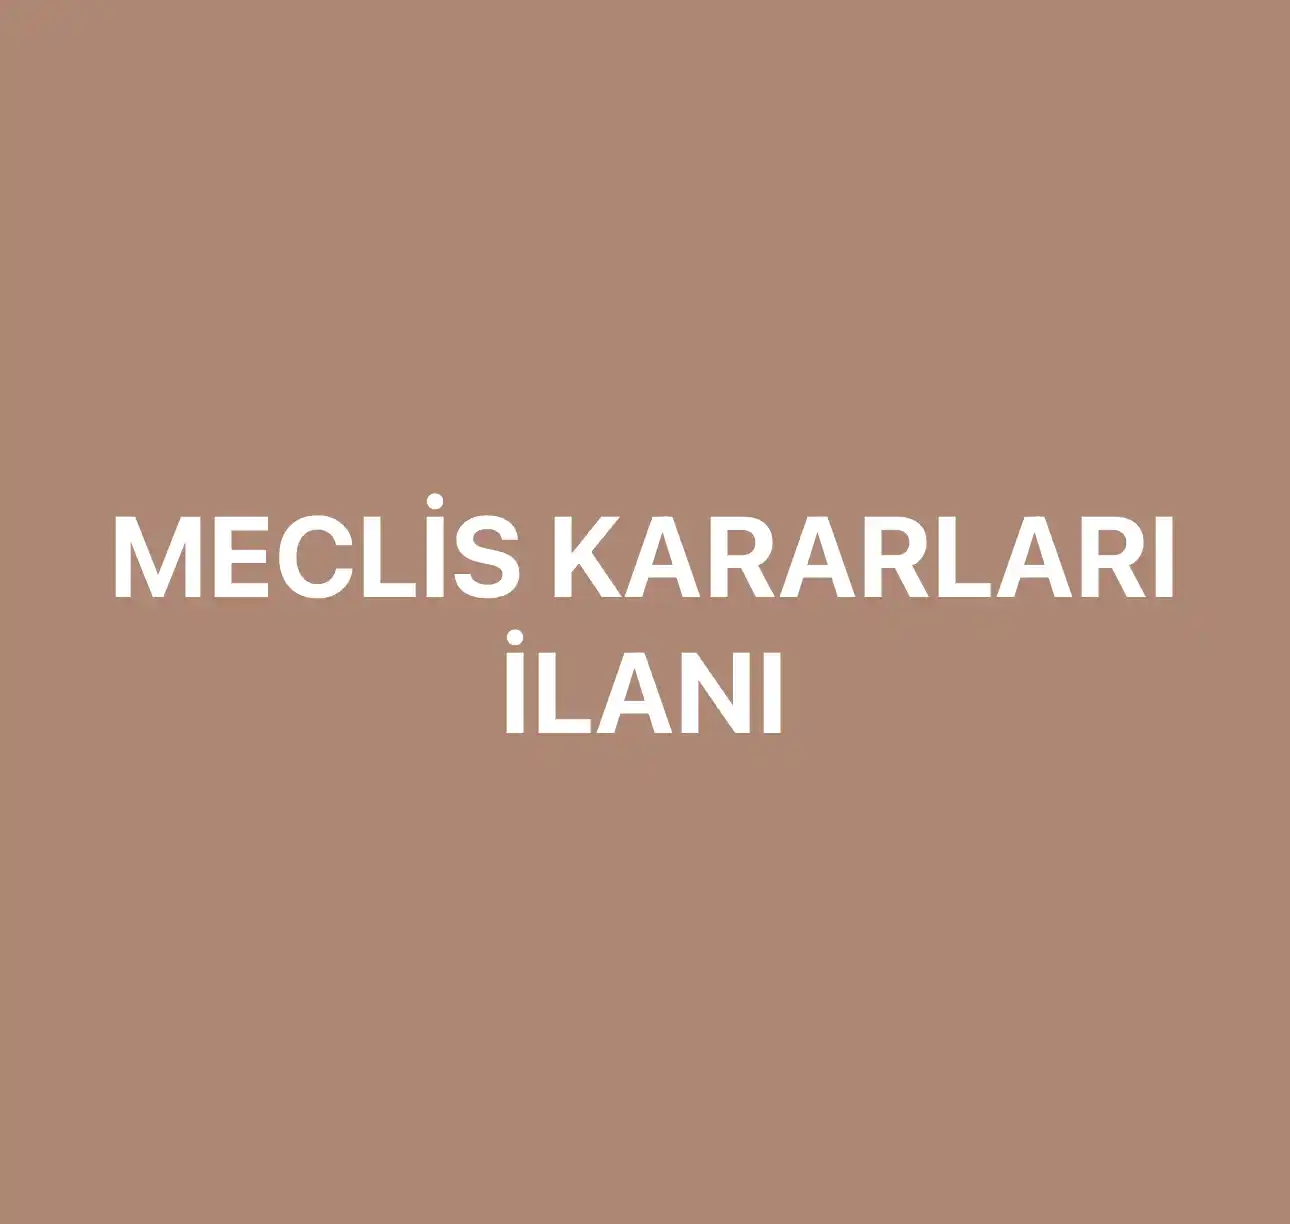 MECLİS KARARLARI